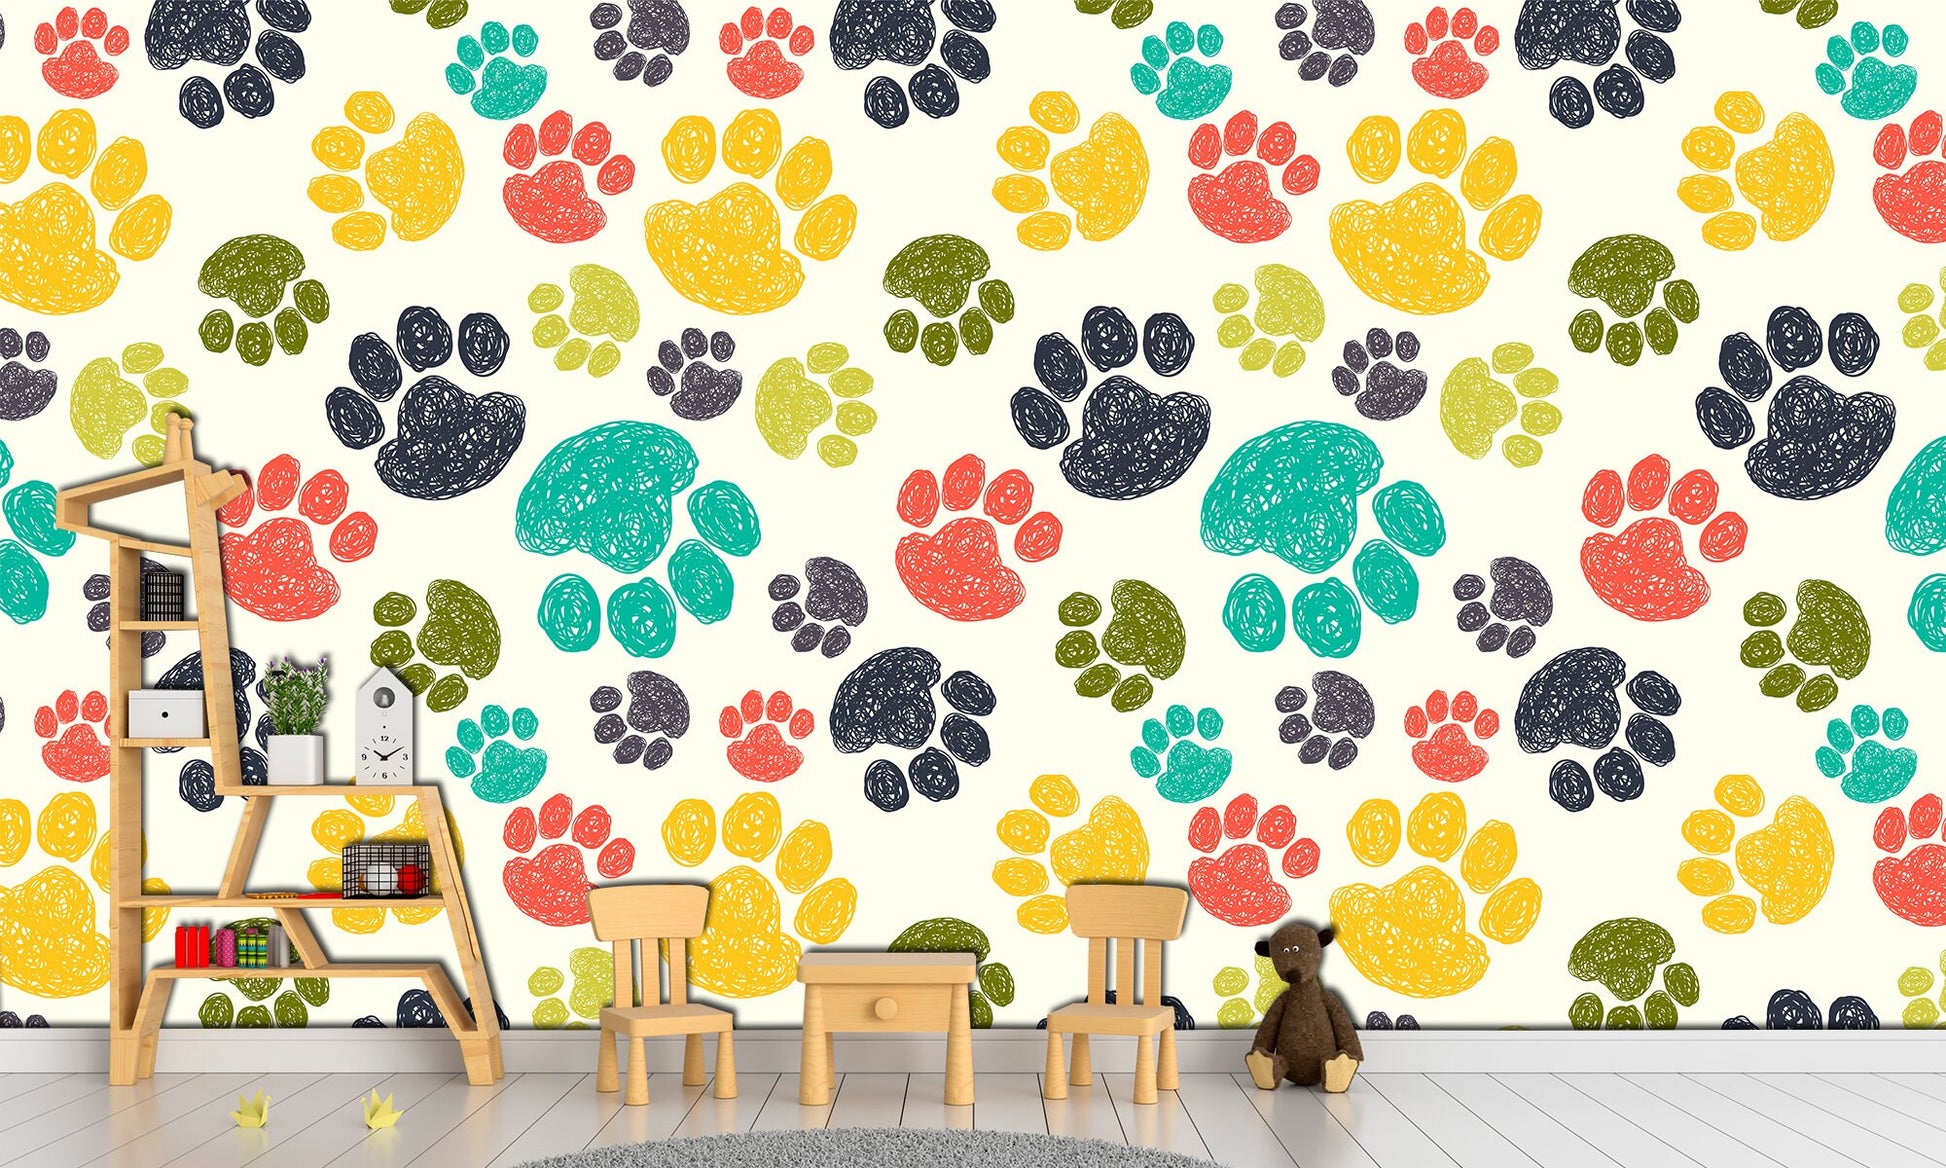 Animal paws decor Art deco wallpaper Animal lover gift, Wallpaper roll Boys room decor Animal wallpaper Nursery wall decor